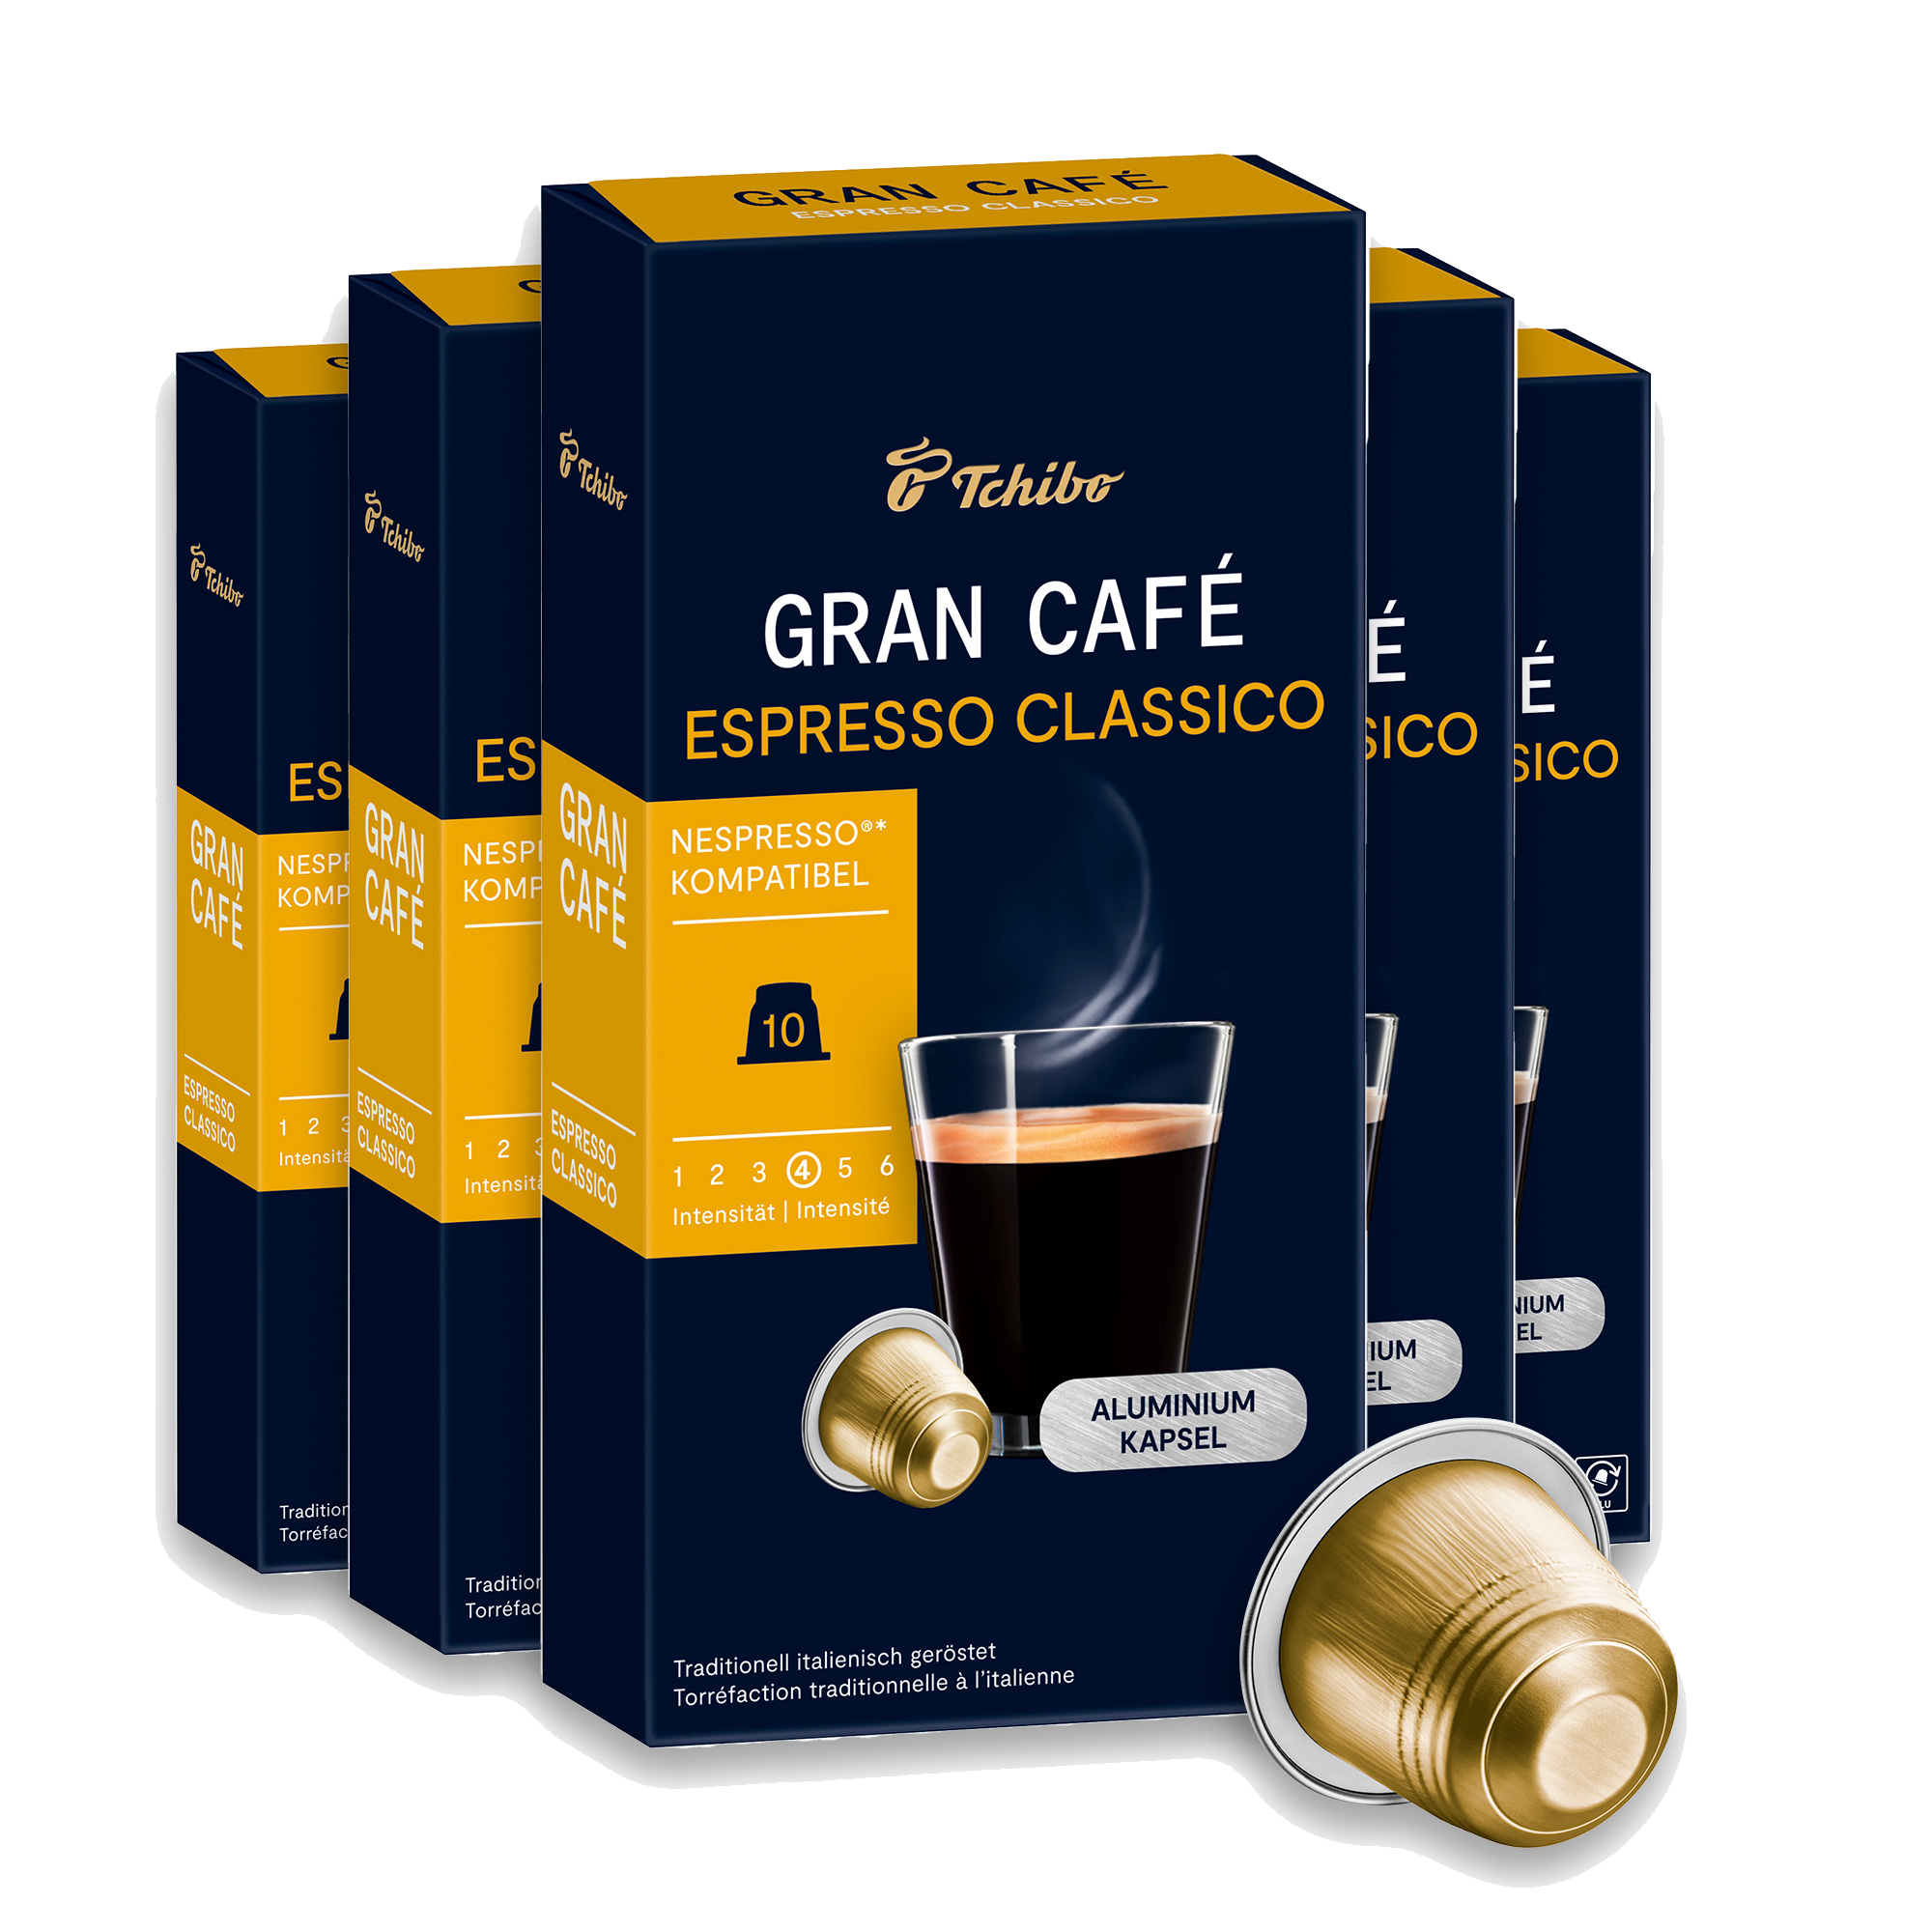 Gran Café Espresso Classico